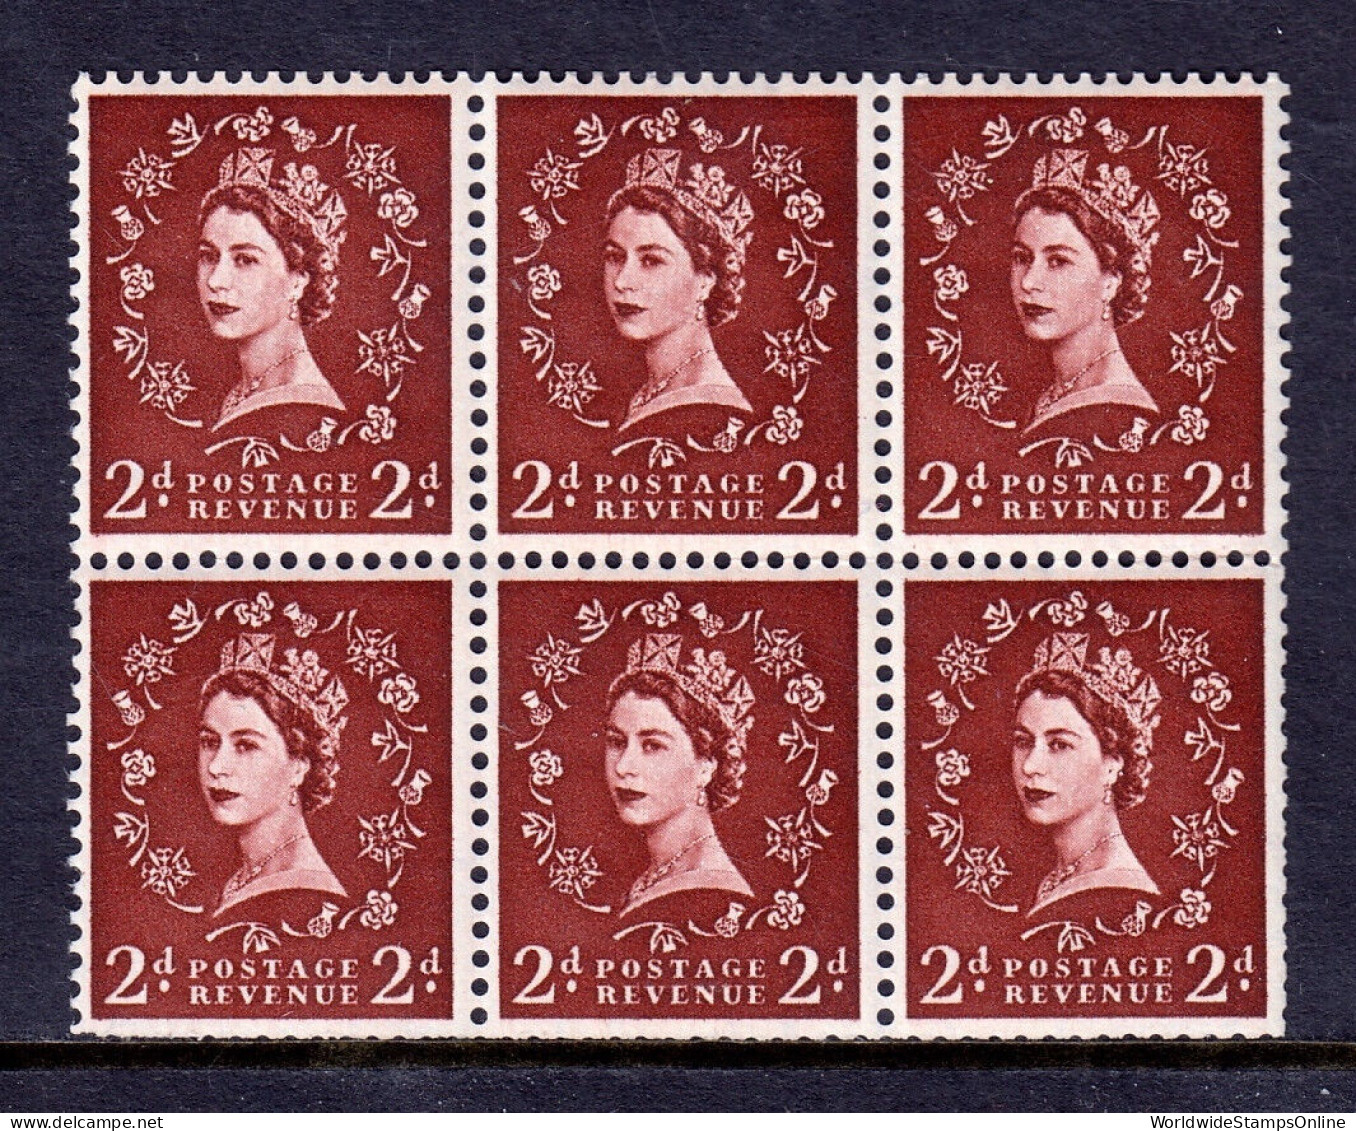 GREAT BRITAIN — SG 518Wi — 1954 2d WILDING PANE, INVERT. WMK. 298 — MNH— SG £180 - Unused Stamps